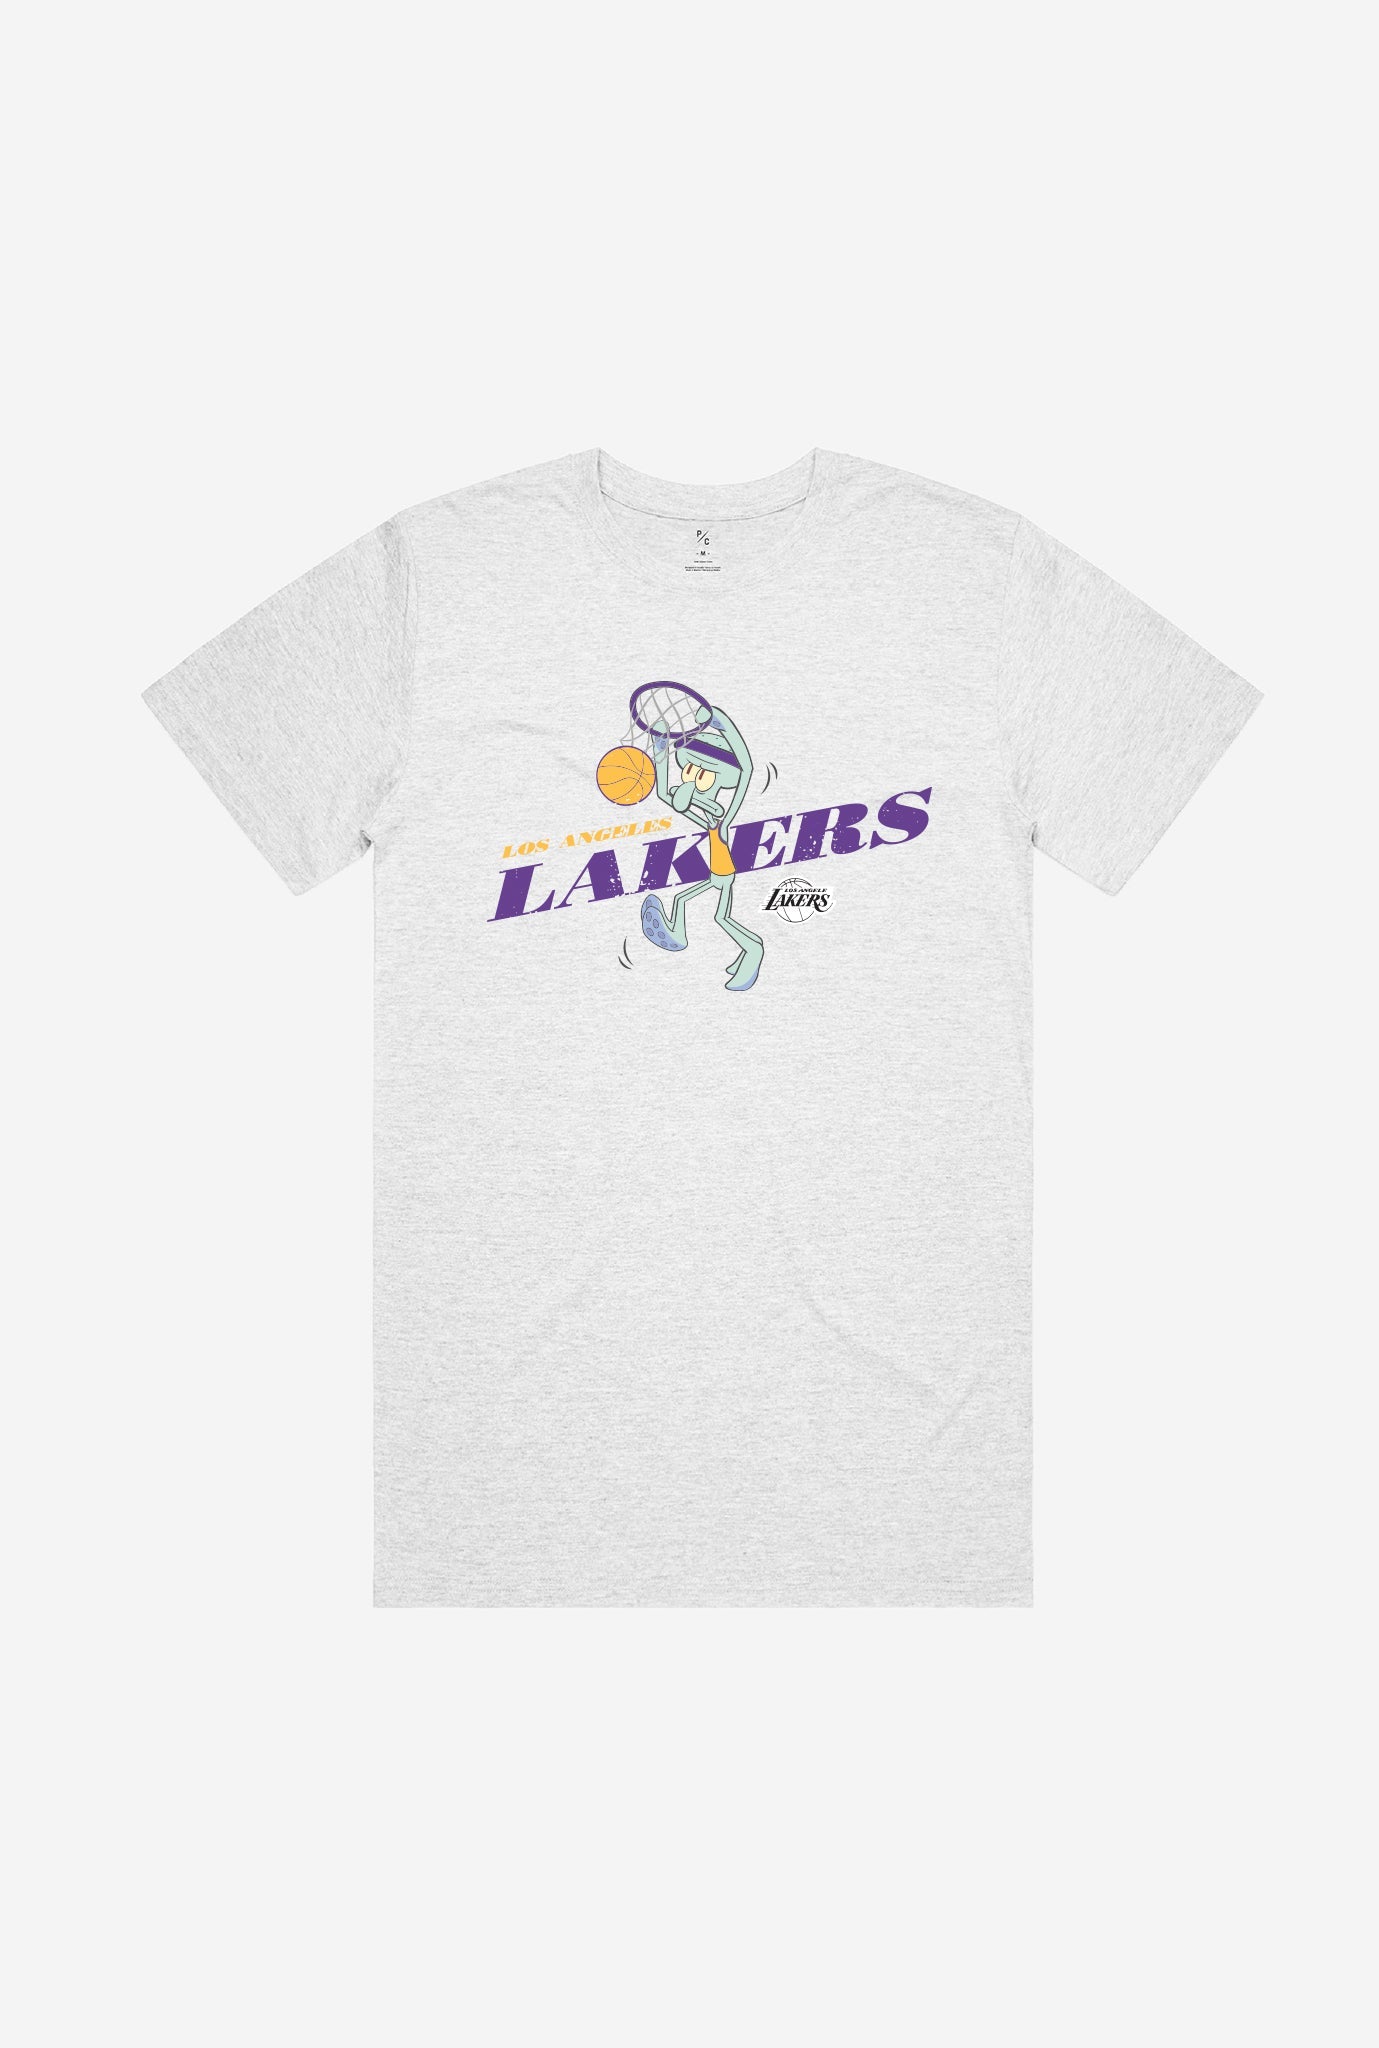 Los Angeles Lakers Squidward T-Shirt - Ash